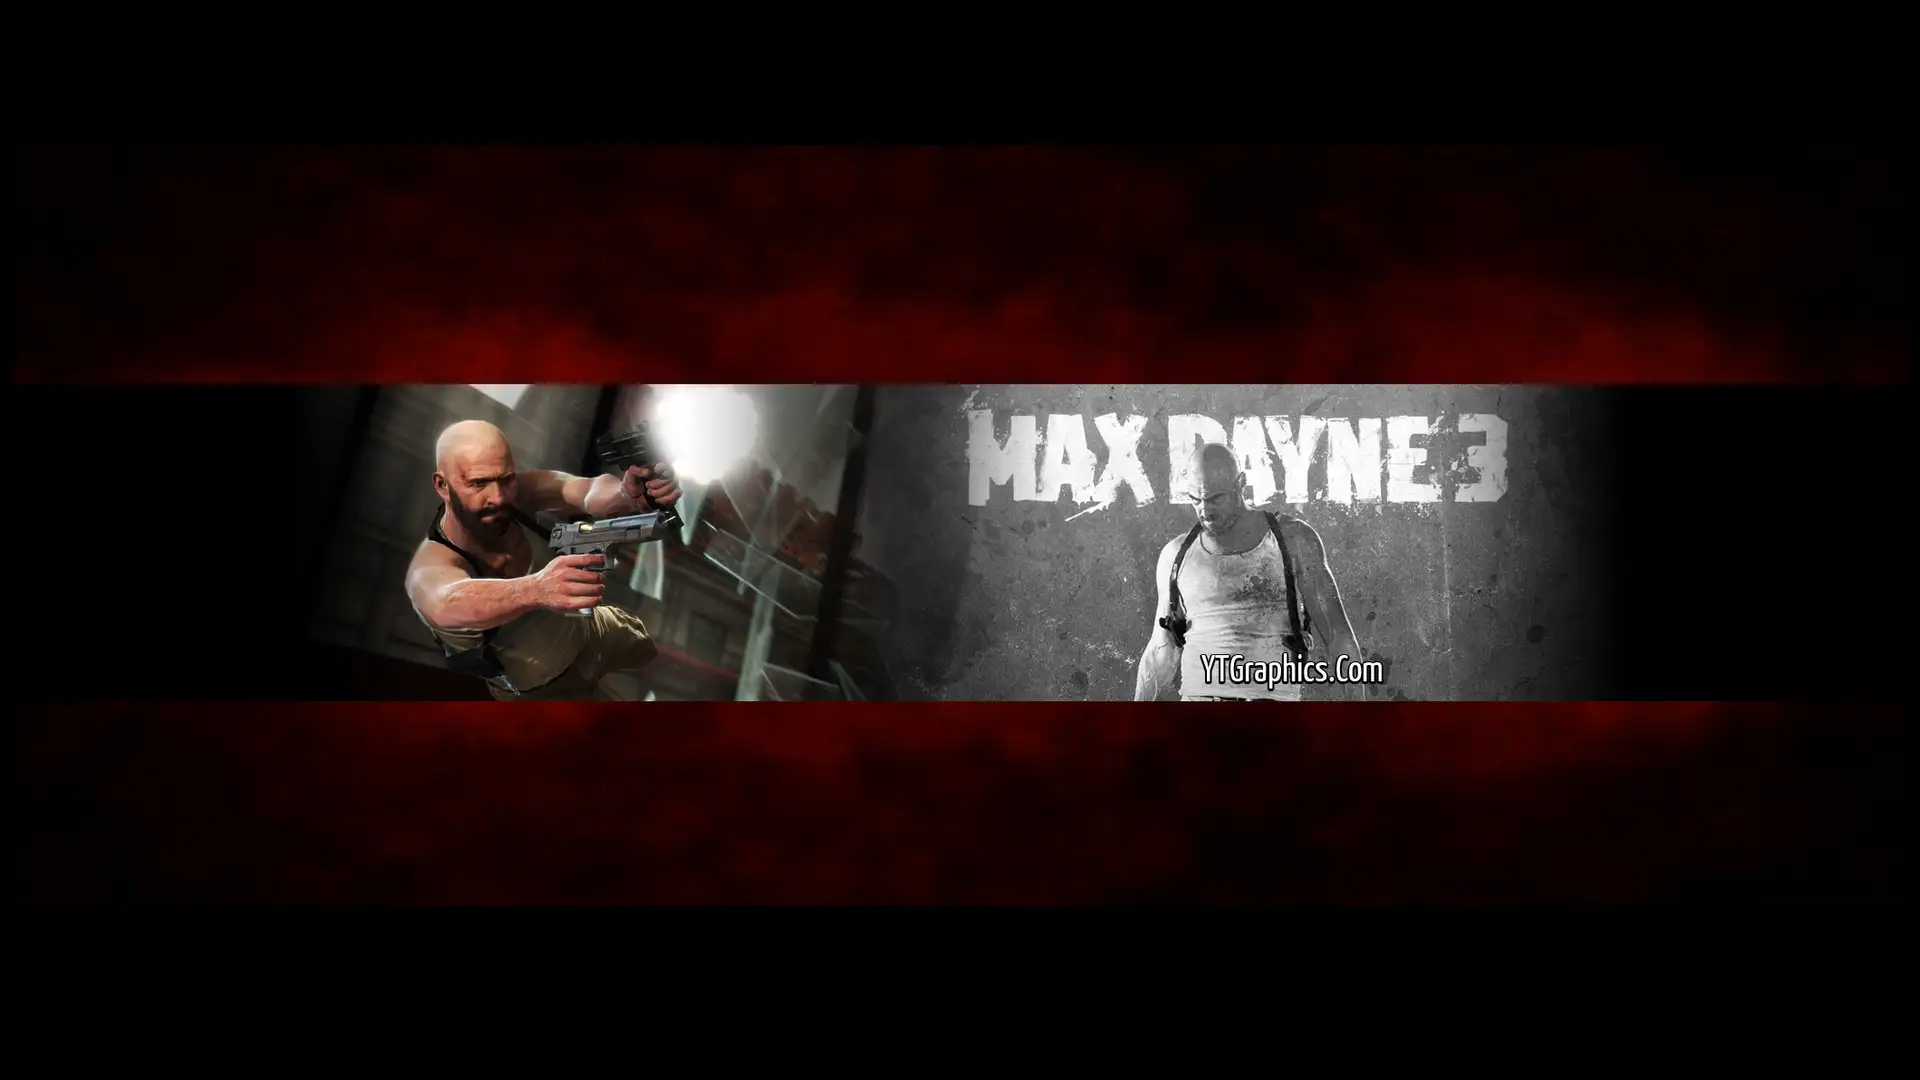 Max Payne 3 Banner